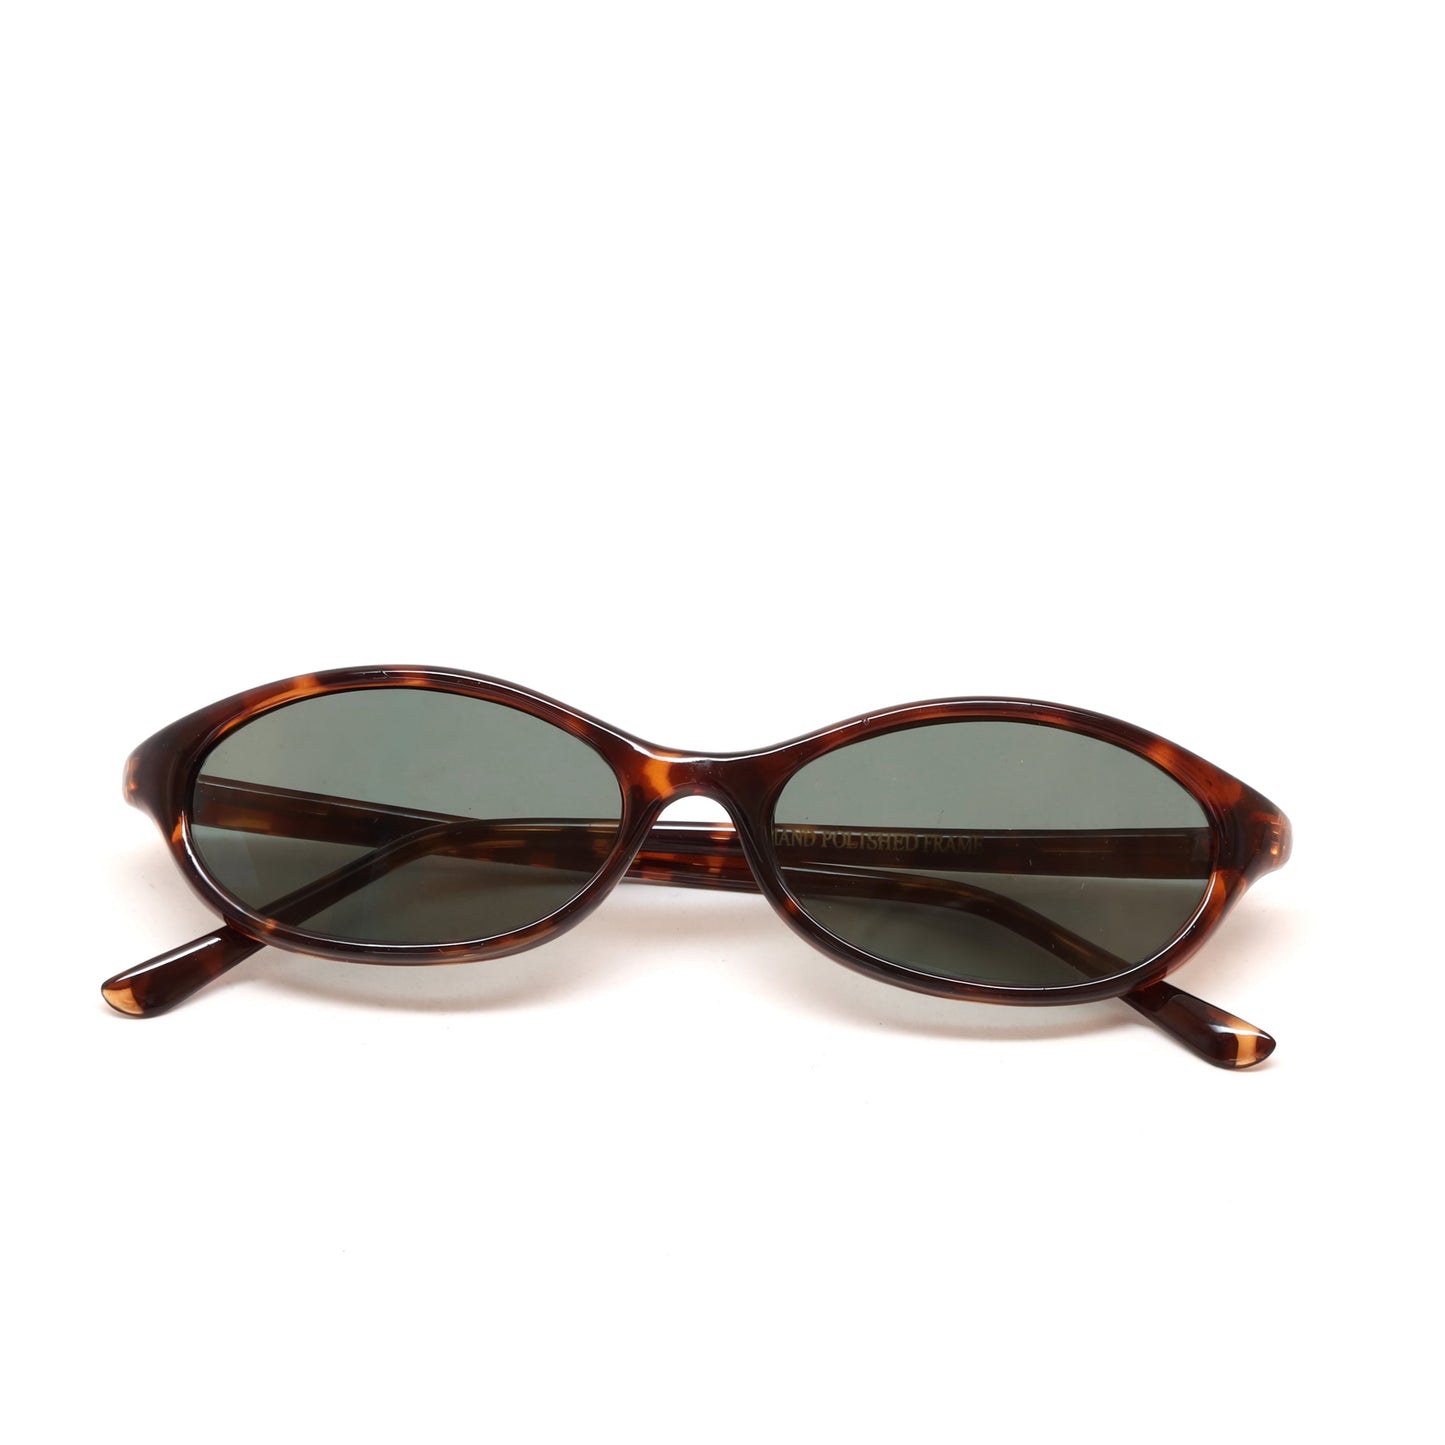 Vintage Small Size 90s/Y2k Bella Oval Frame Sunglasses - Tortoise